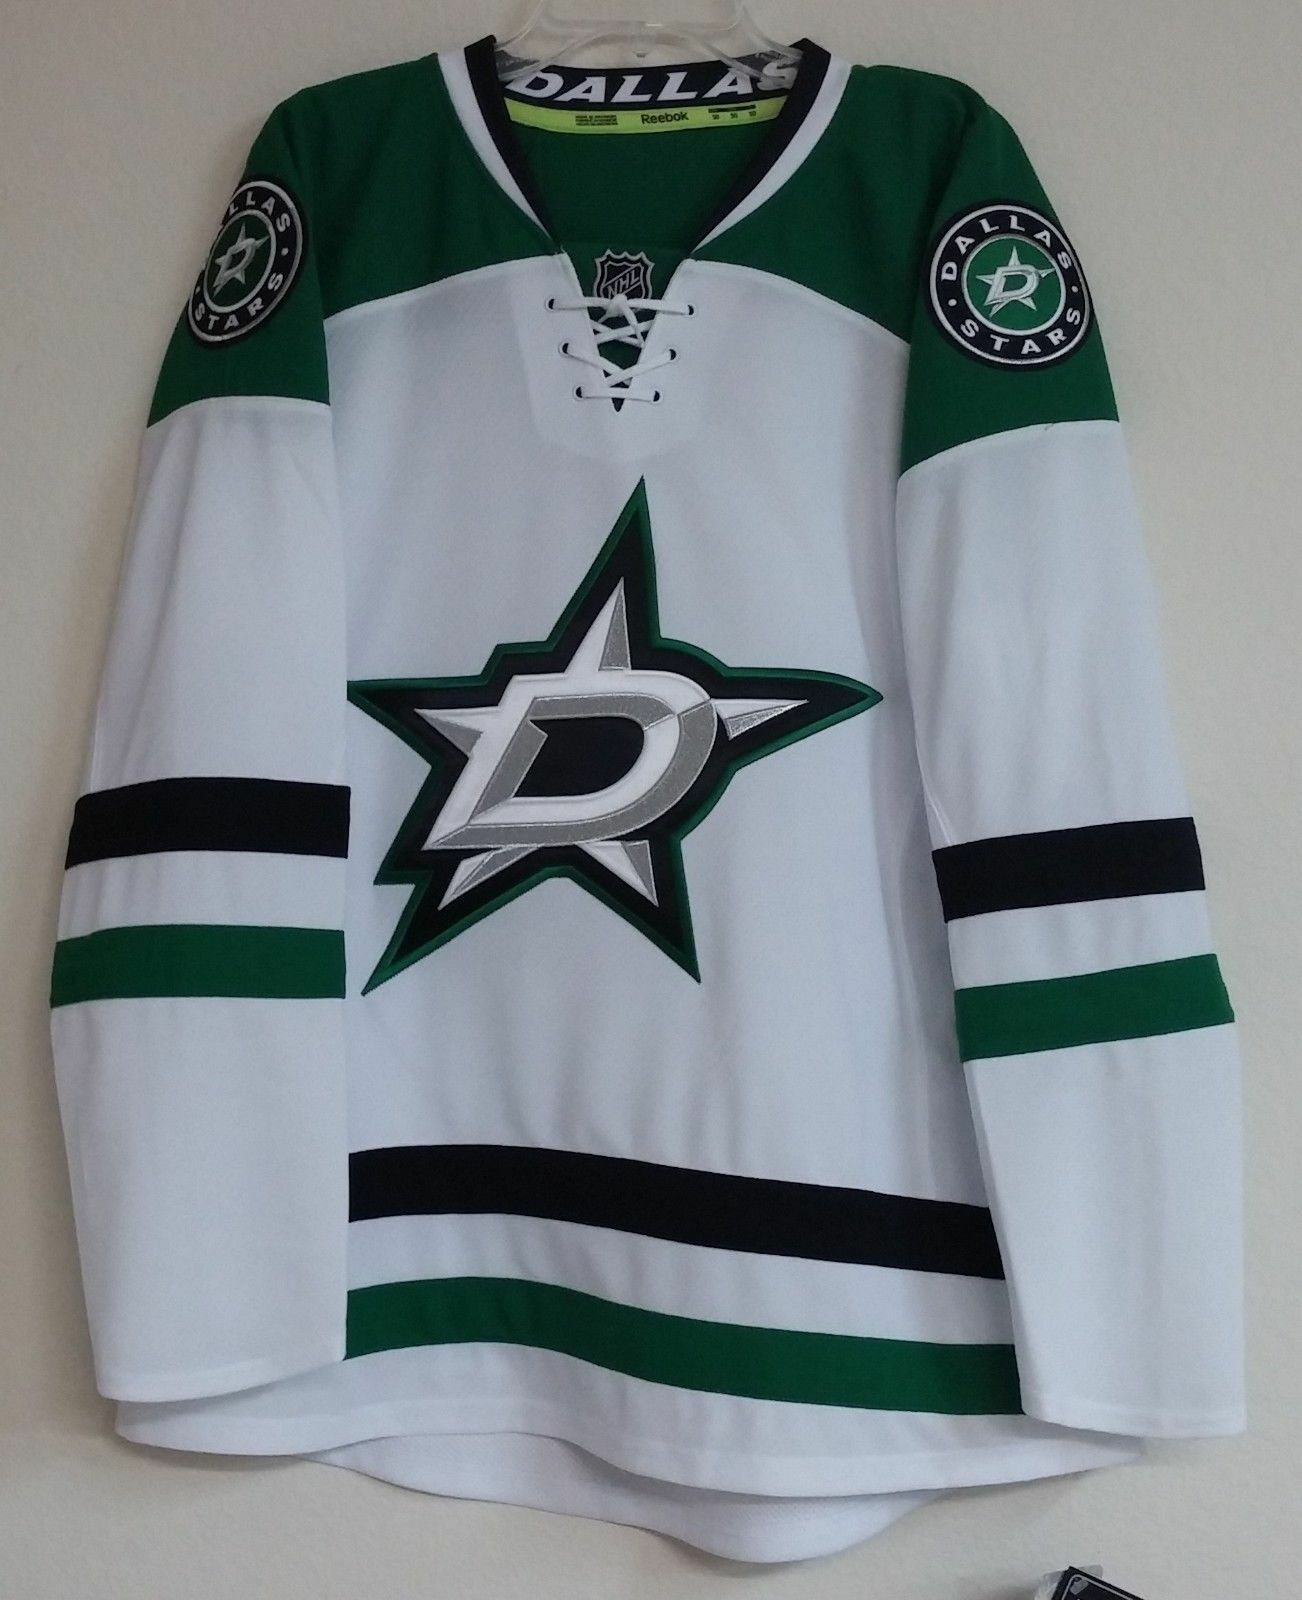 DALLAS STARS reebok NHL authentic EDGE 1.0 hockey jersey away-white size 52 NEW Image 1